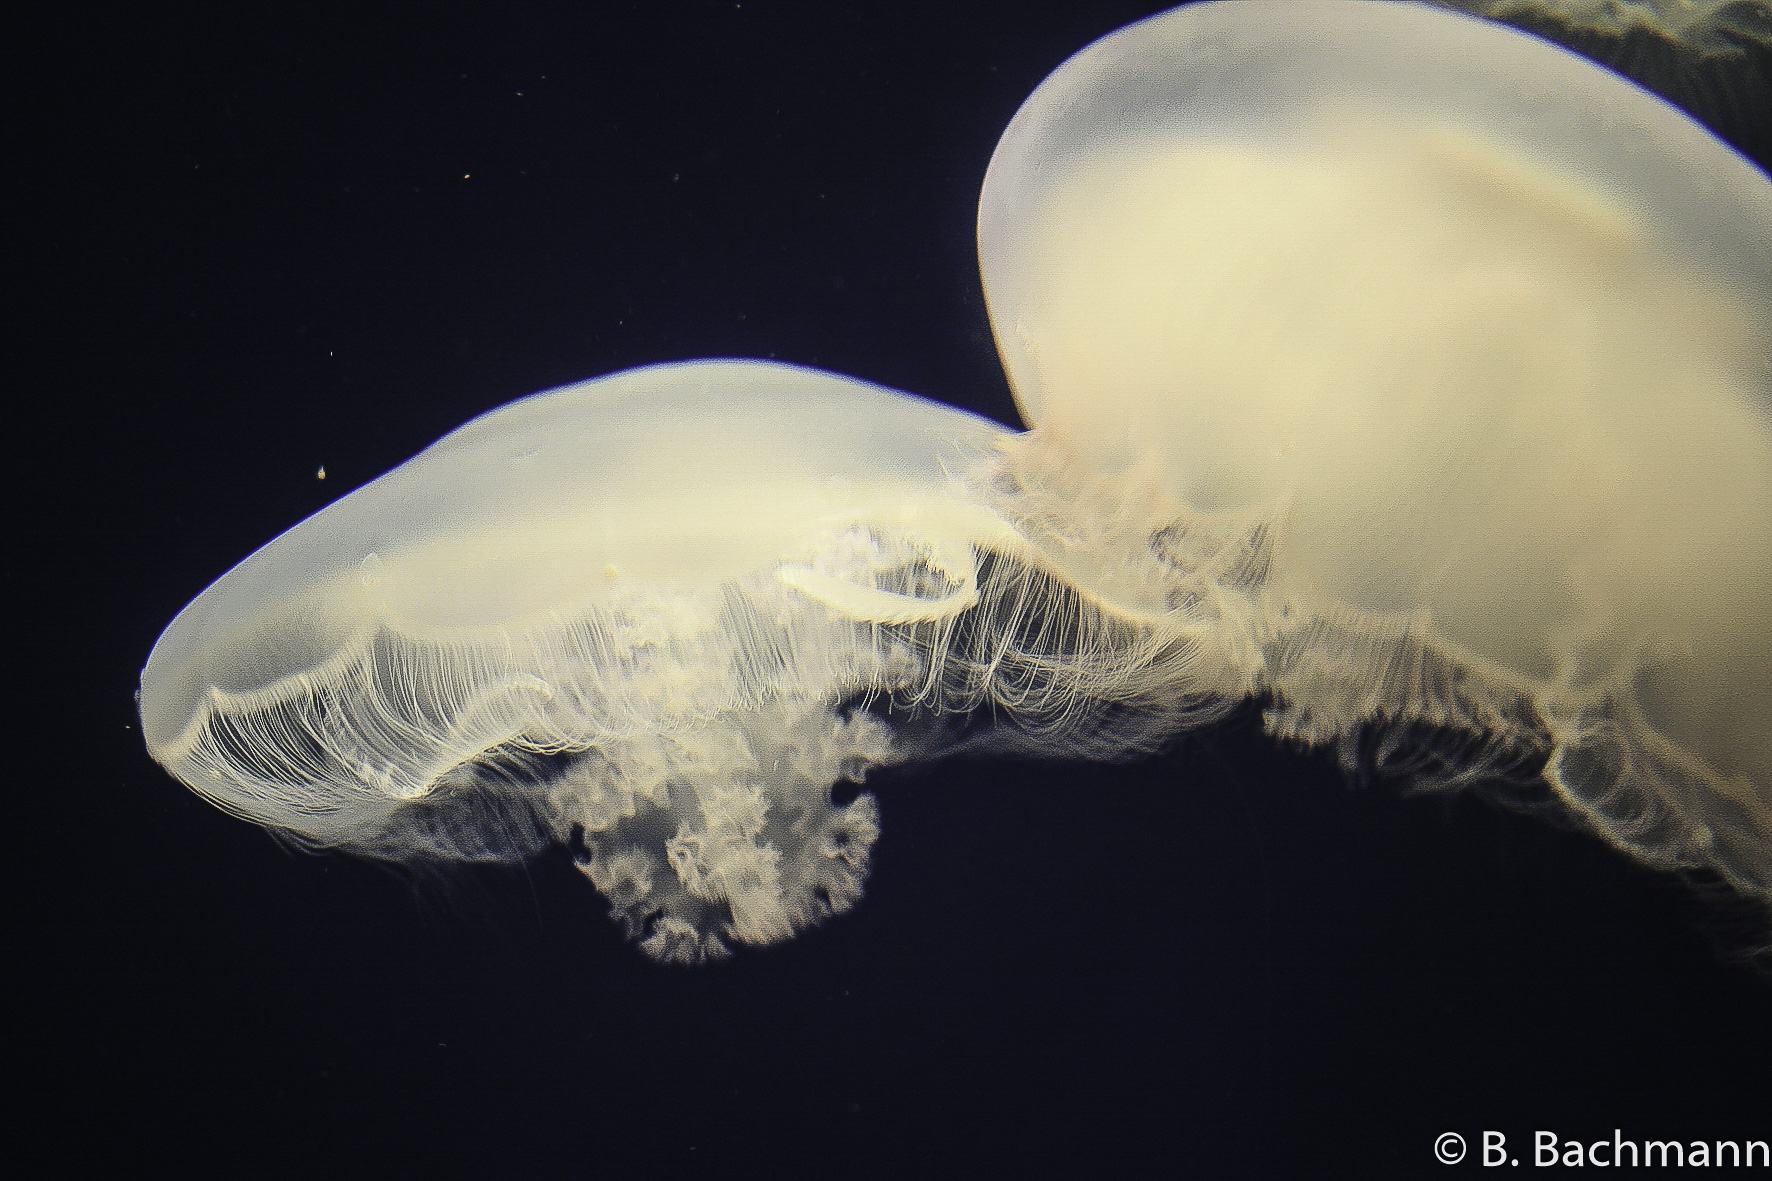 Jellyfish_0006.jpg